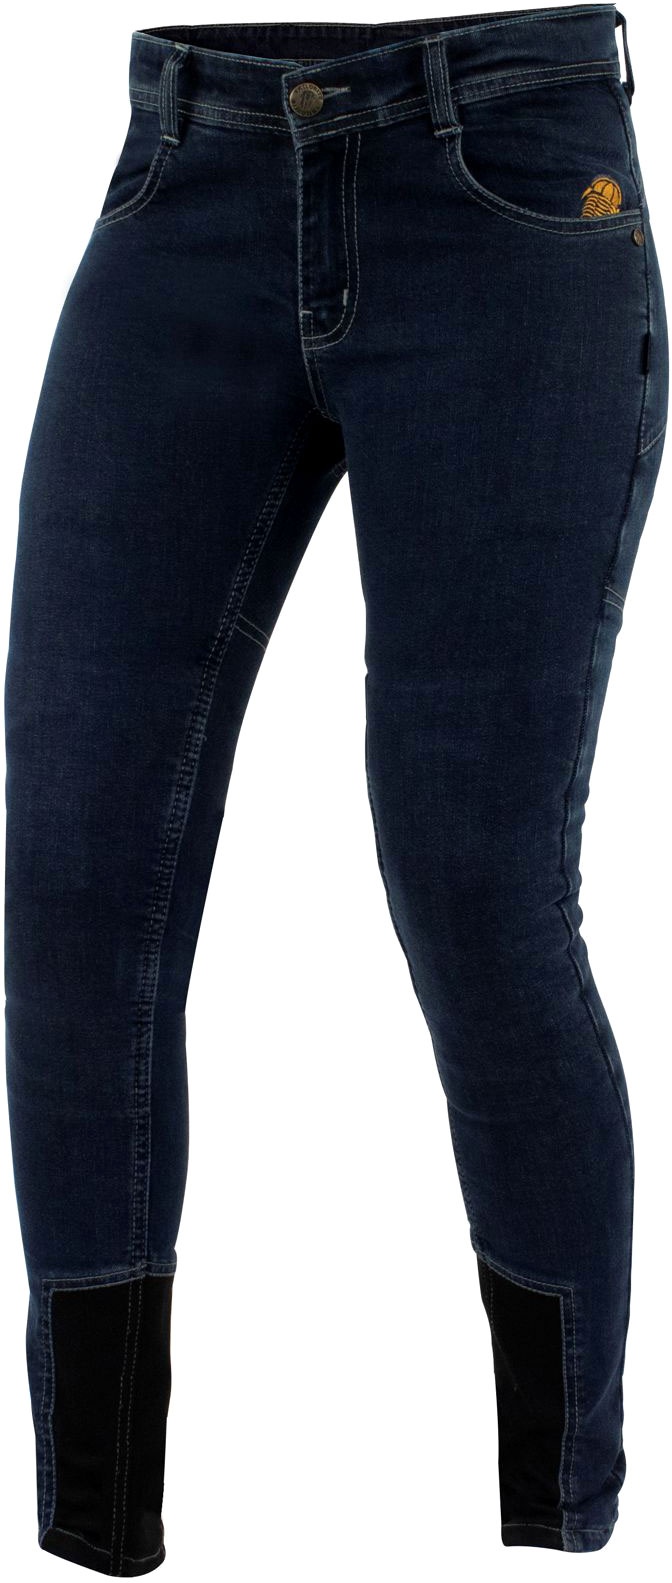 Trilobite All Shape, jeans femmes - Bleu - 38/32